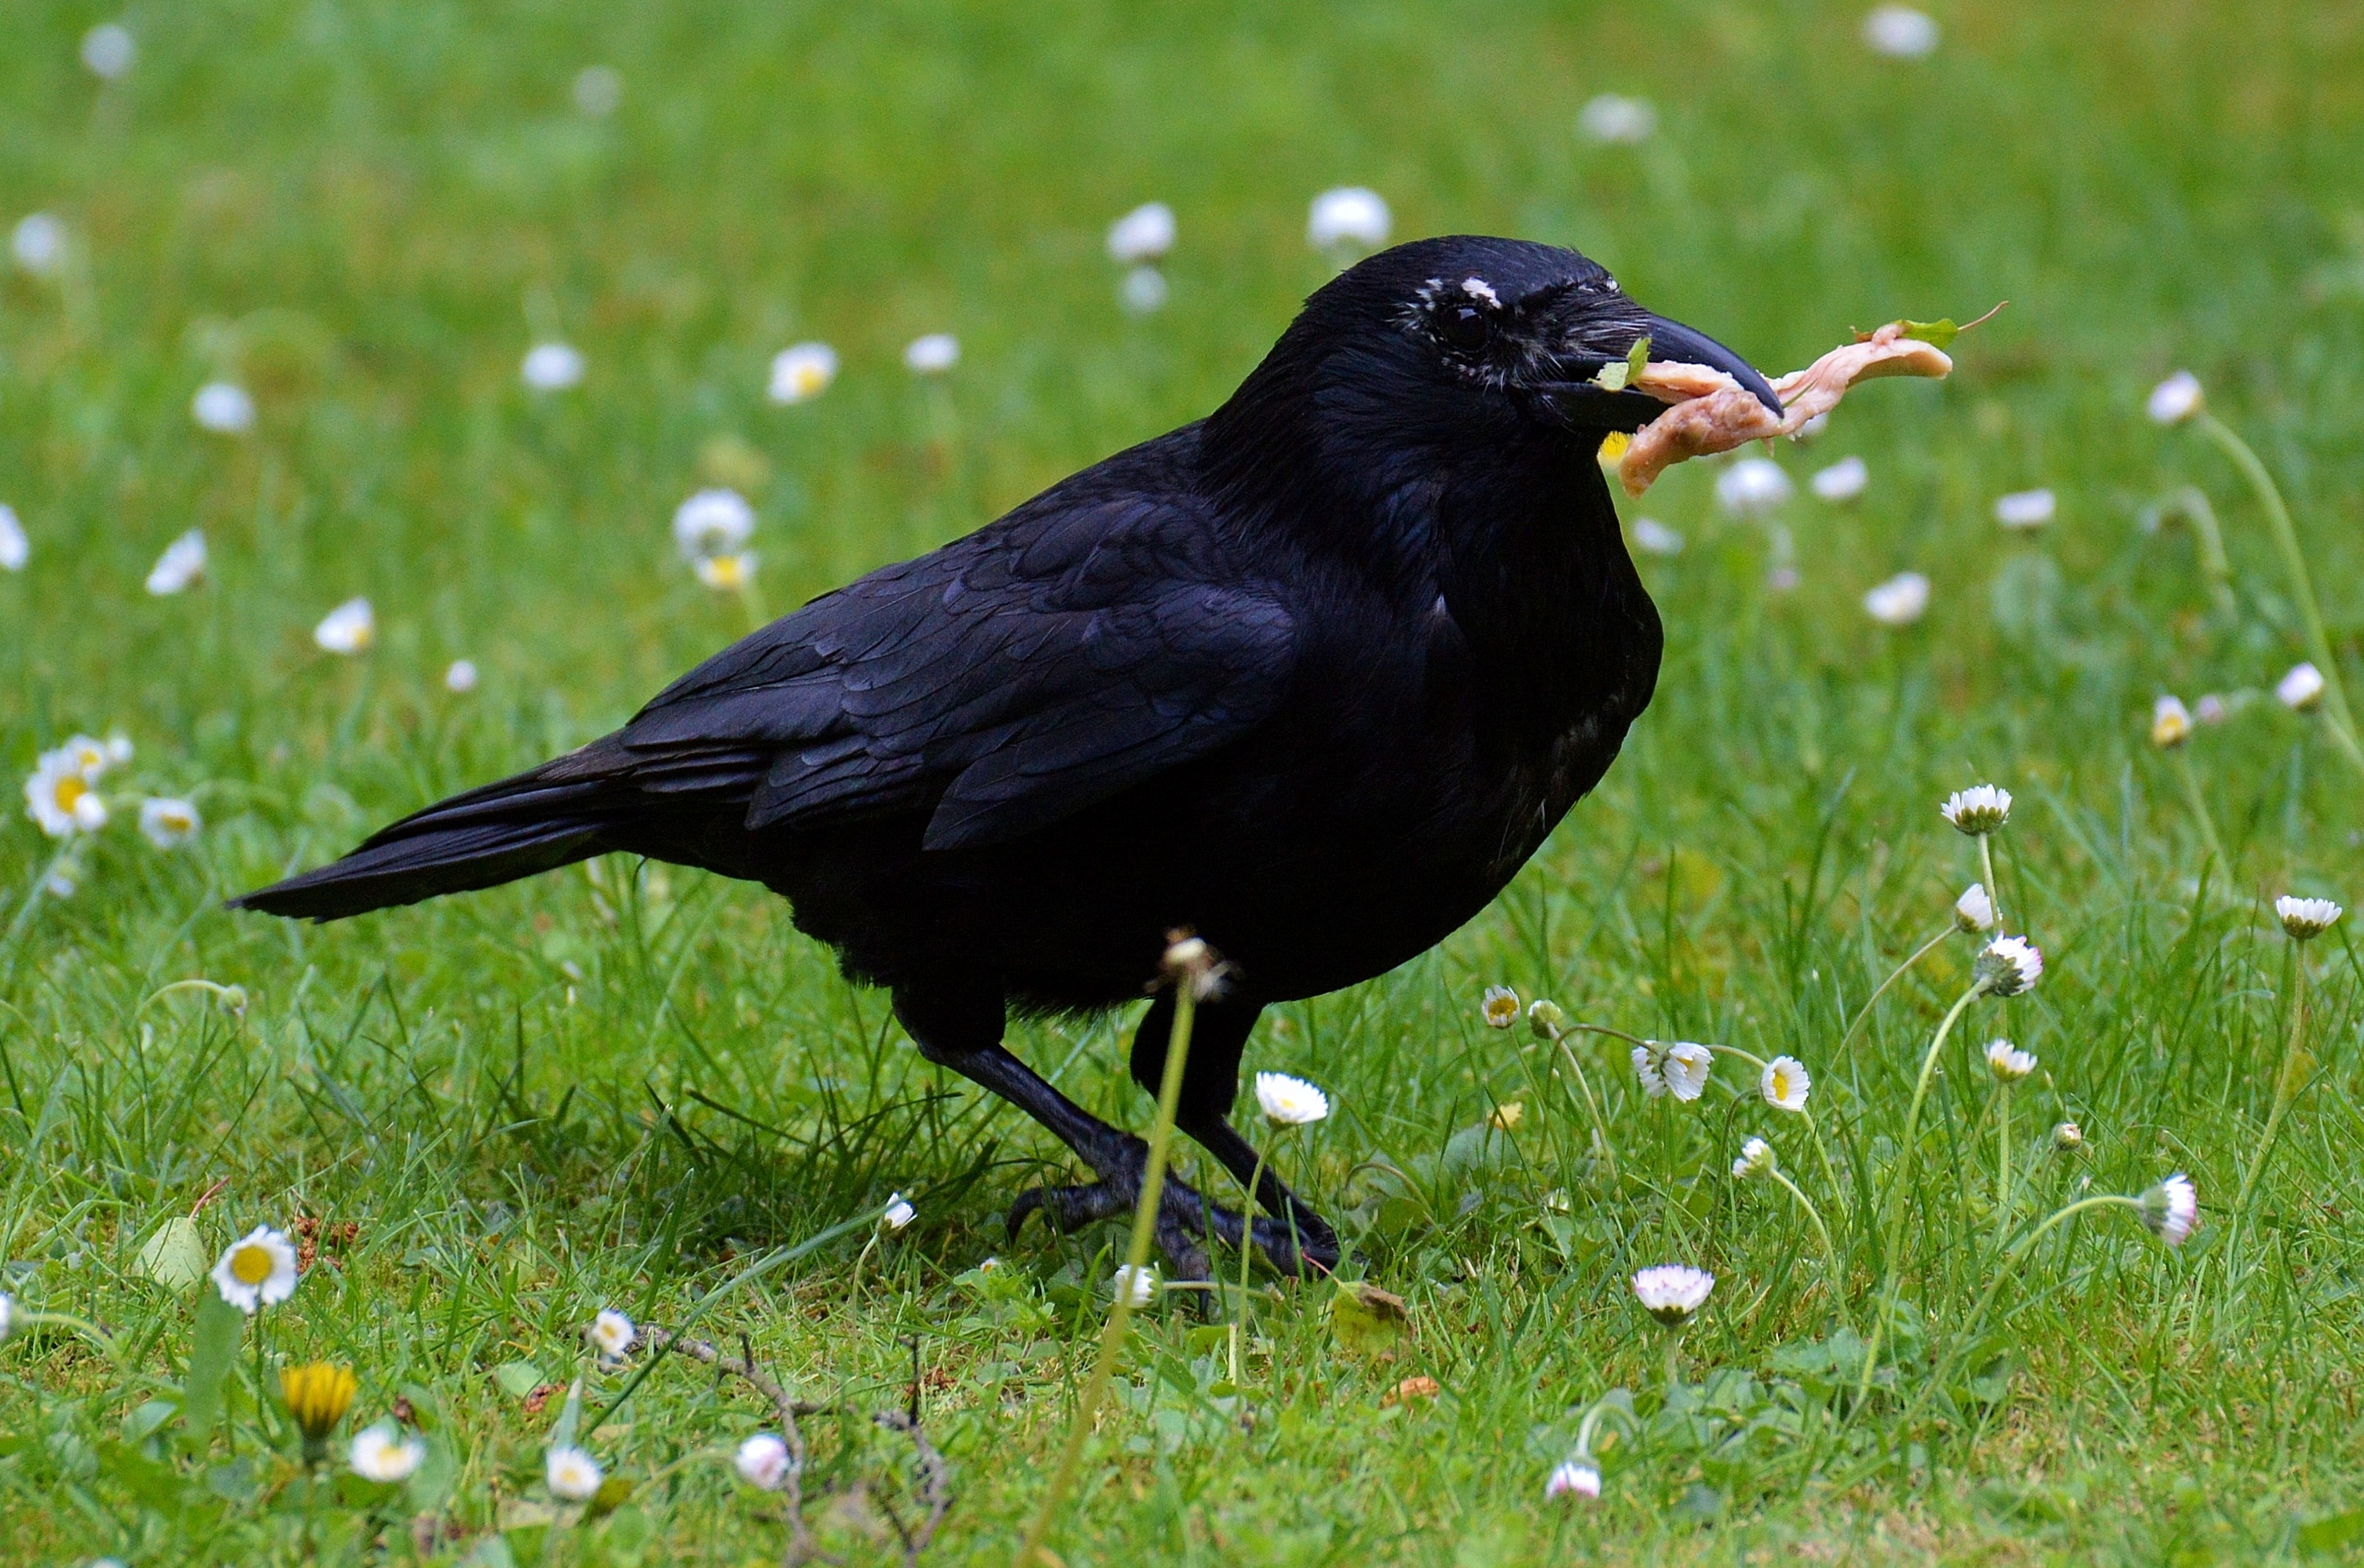 black raven on grass field